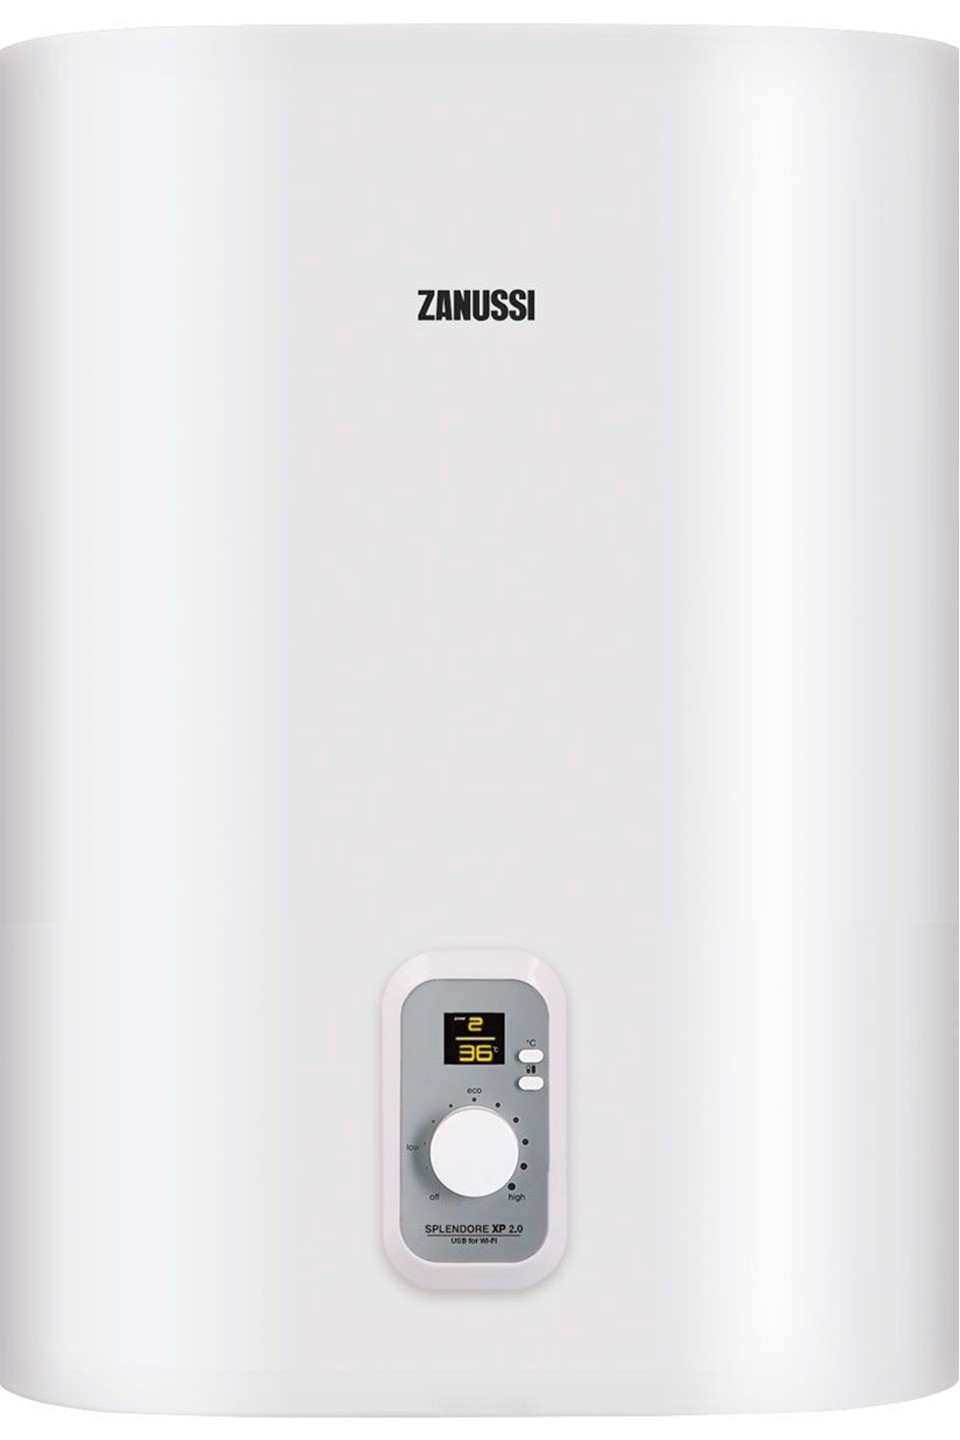 Бойлер Zanussi ZWH/S 100 Splendore XP 2.0 в интернет-магазине, главное фото